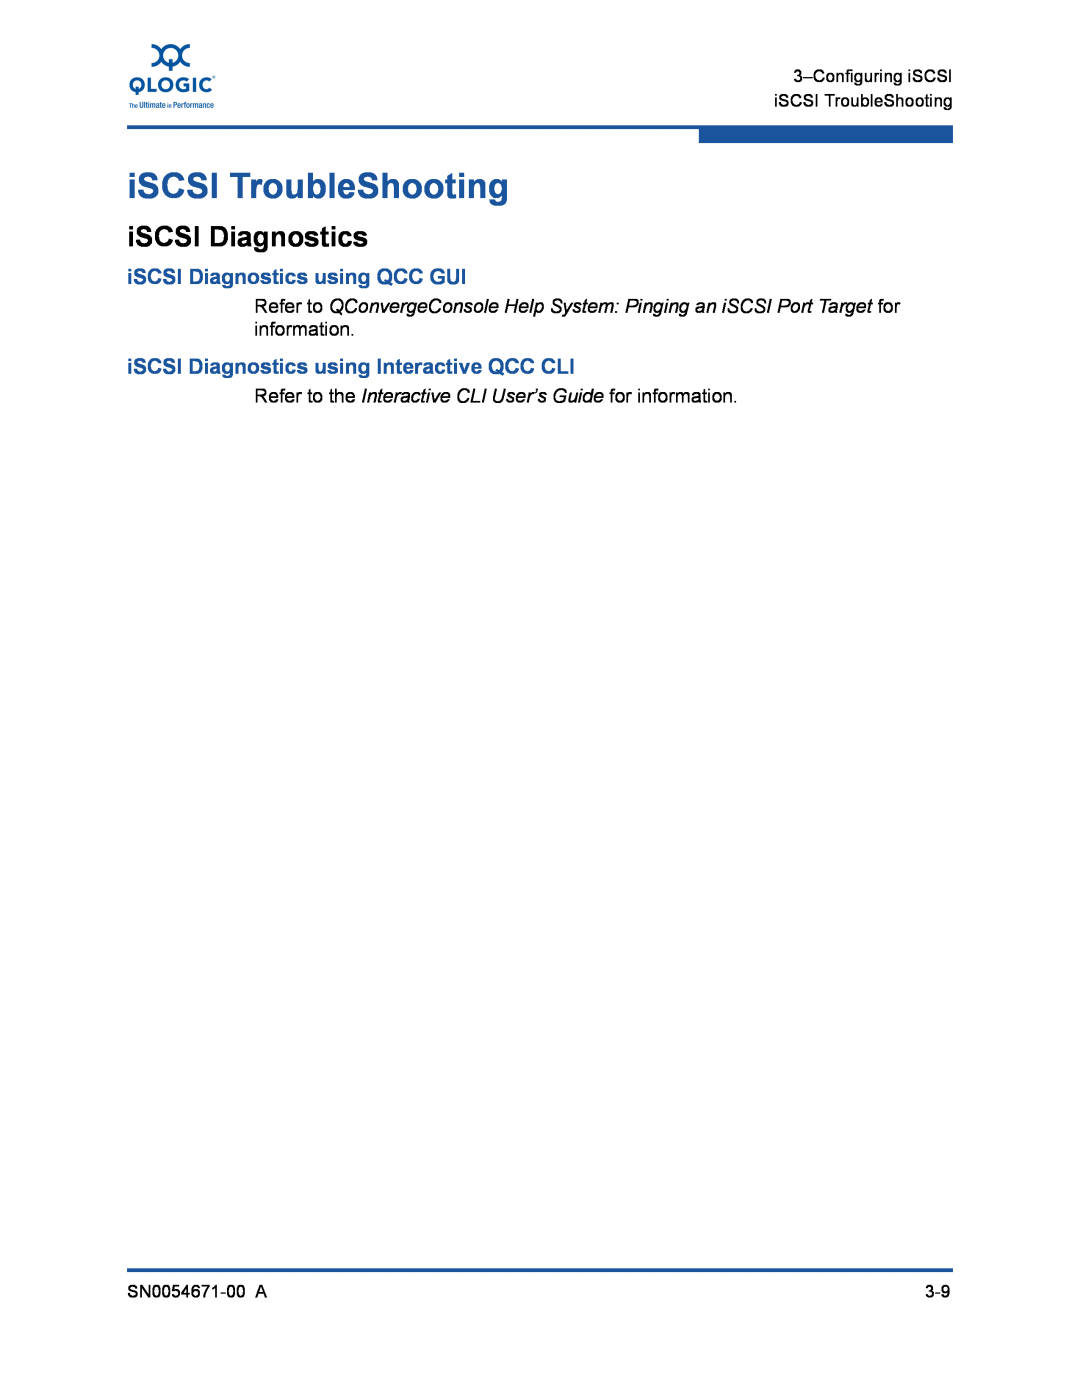 Q-Logic 3200, 8200 iSCSI TroubleShooting, iSCSI Diagnostics using QCC GUI, iSCSI Diagnostics using Interactive QCC CLI 